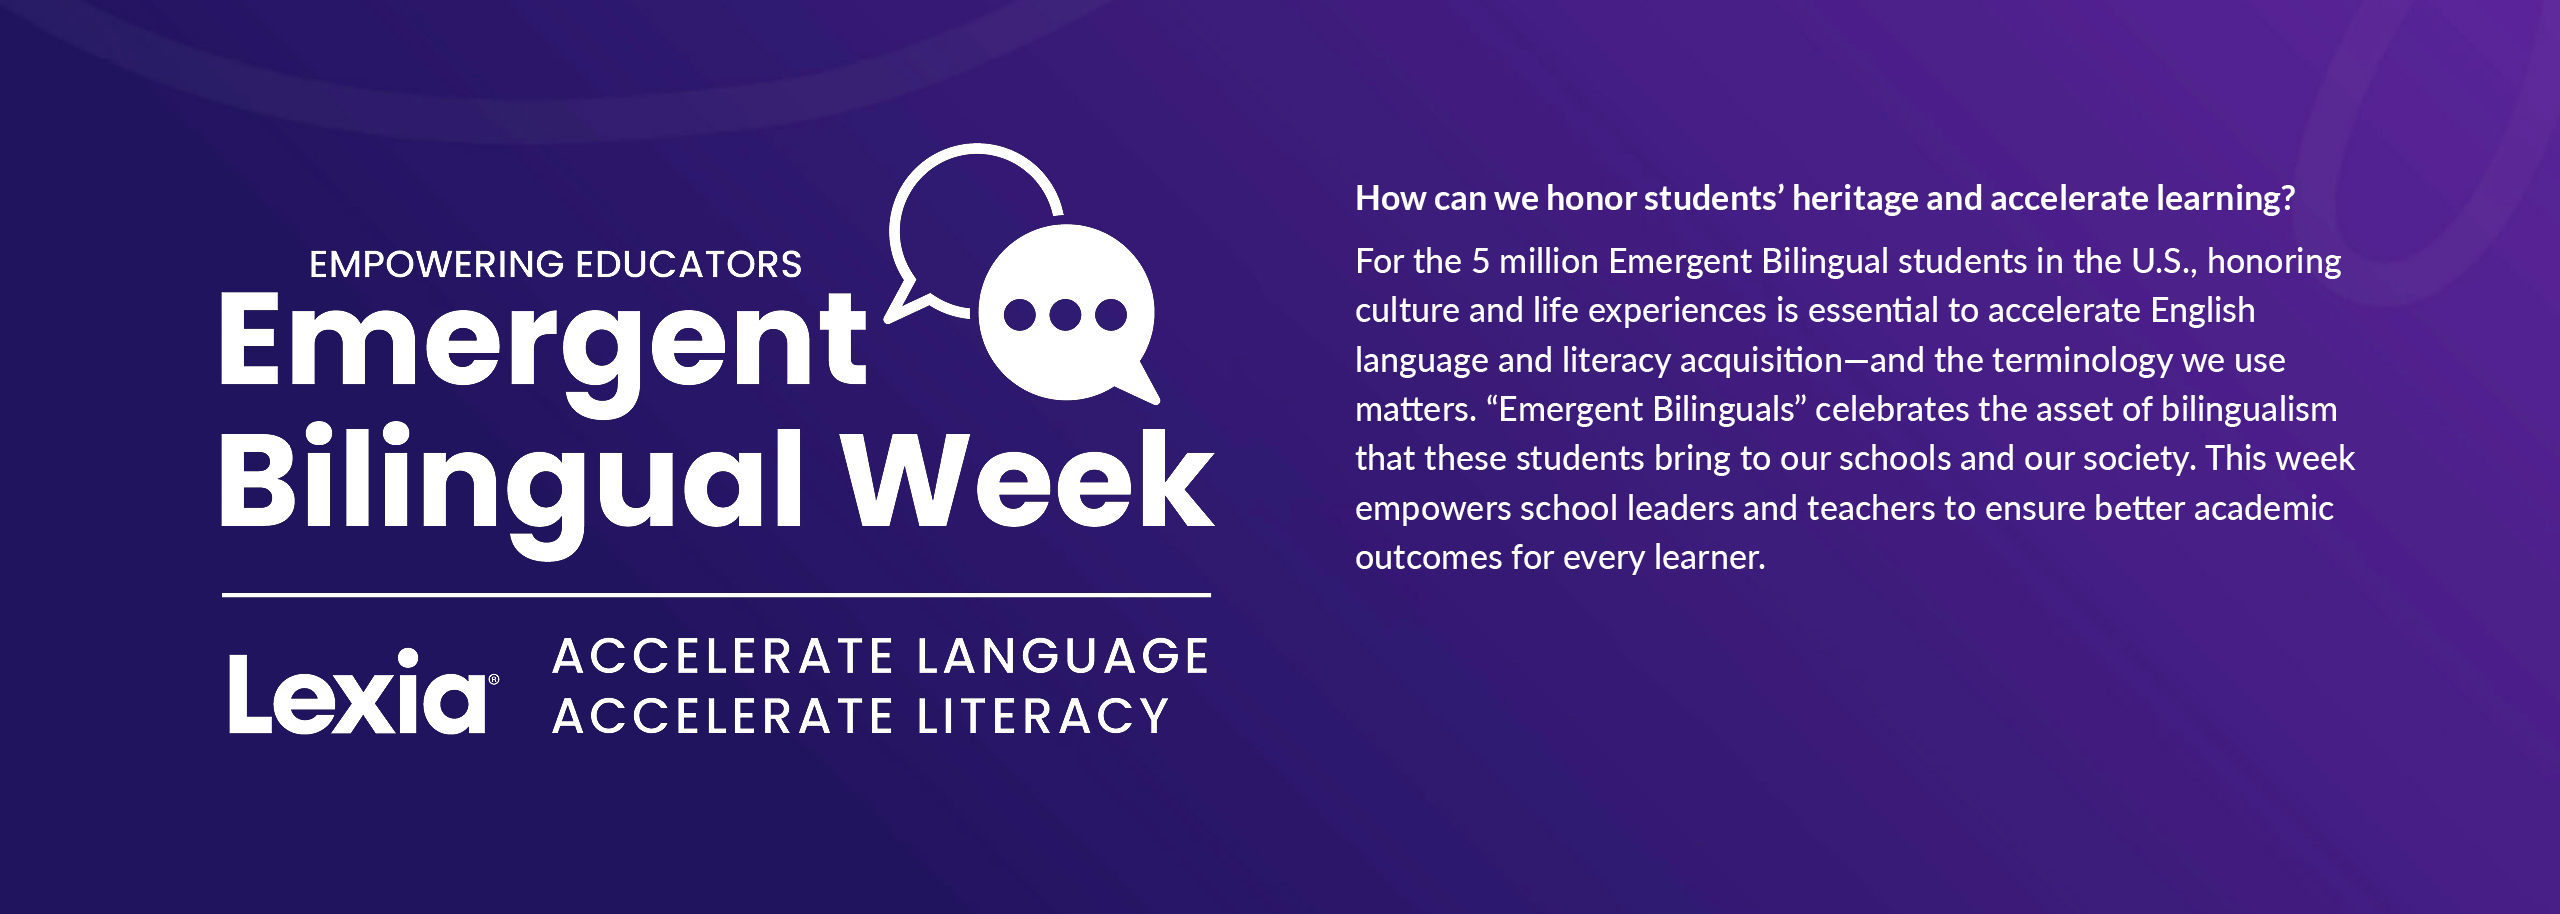 Emergent Bilingual Education Week